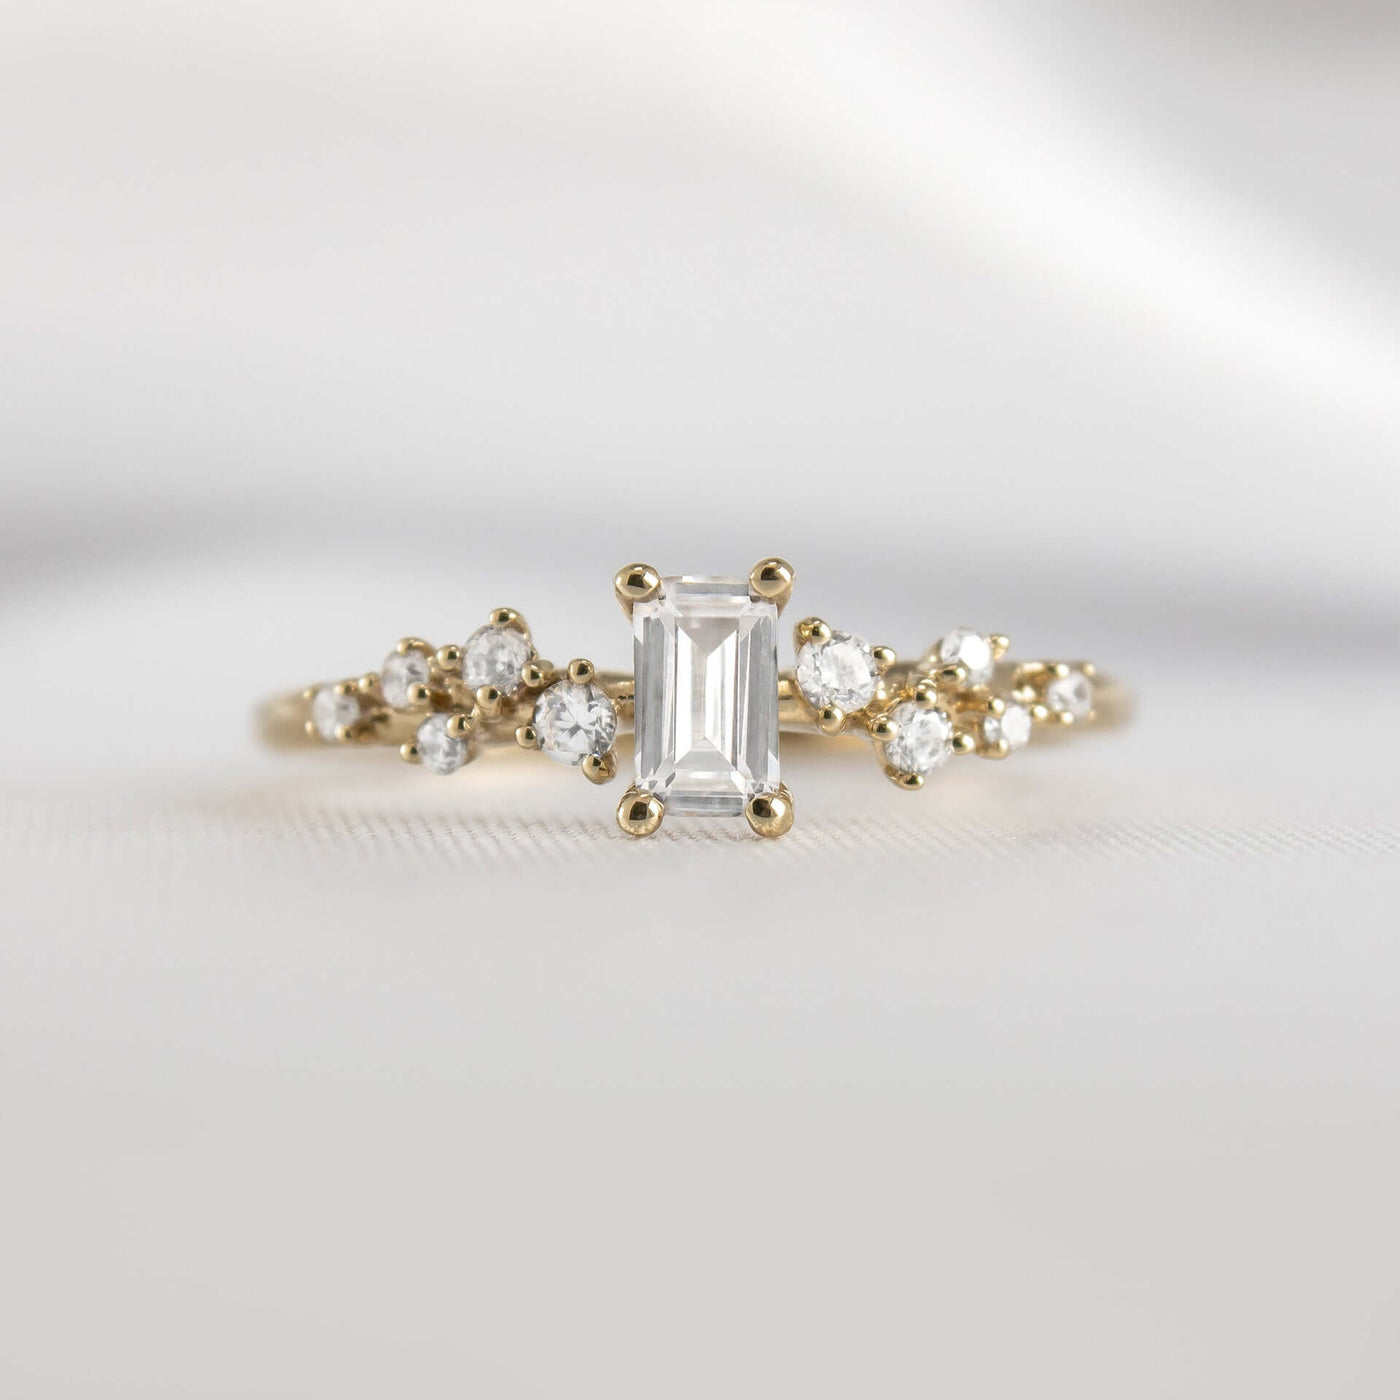 Show in 0.6 carat * The Polaris Diamond Engagement Ring - Lisa Robin#shape_emreald